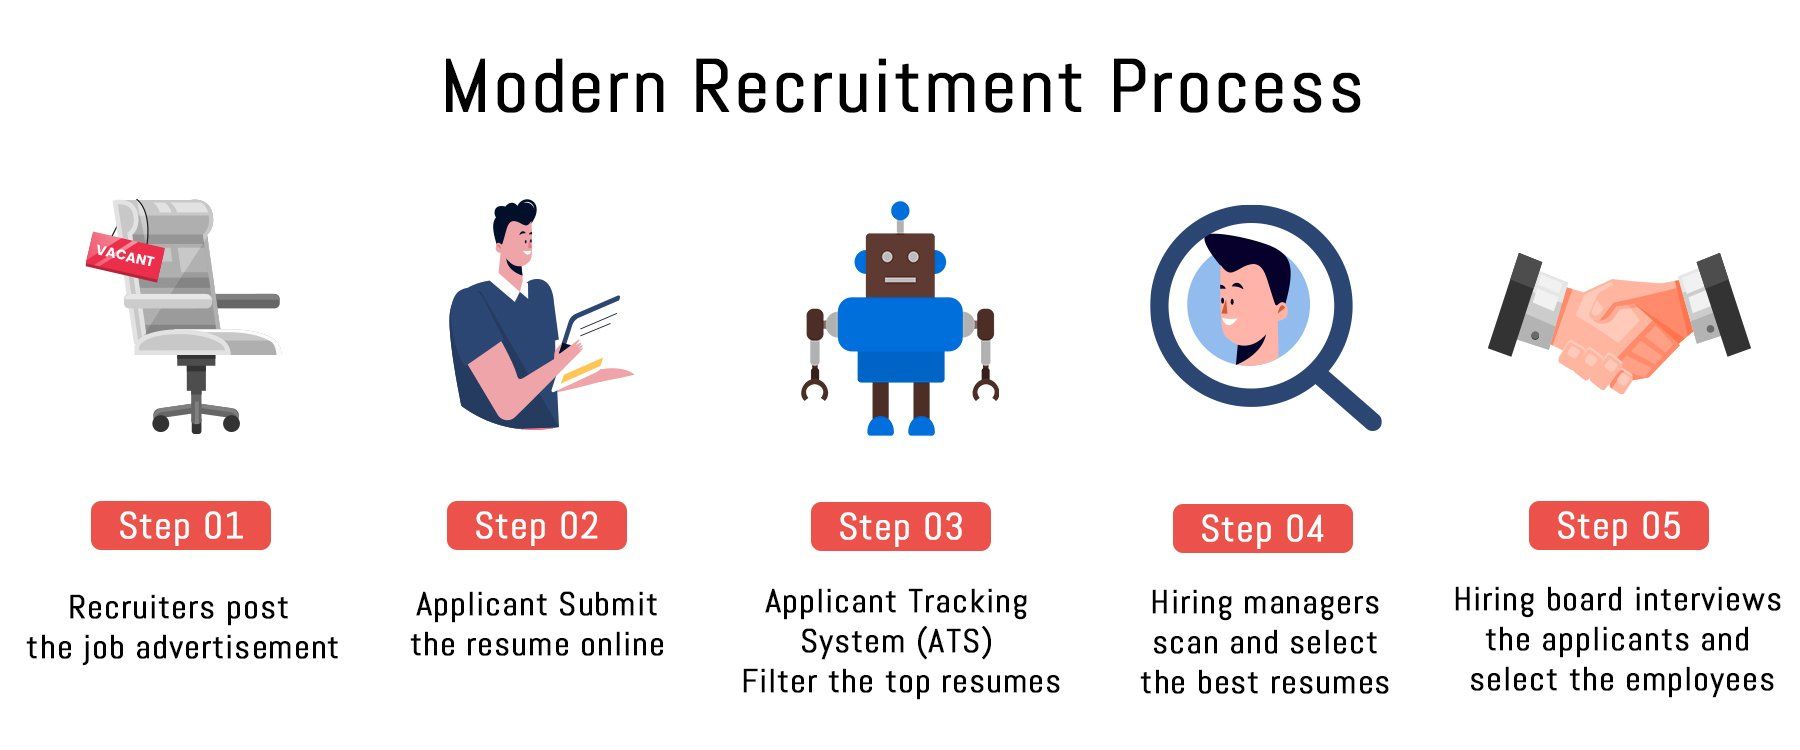 modern recruitment process of innovation companies - cresuma